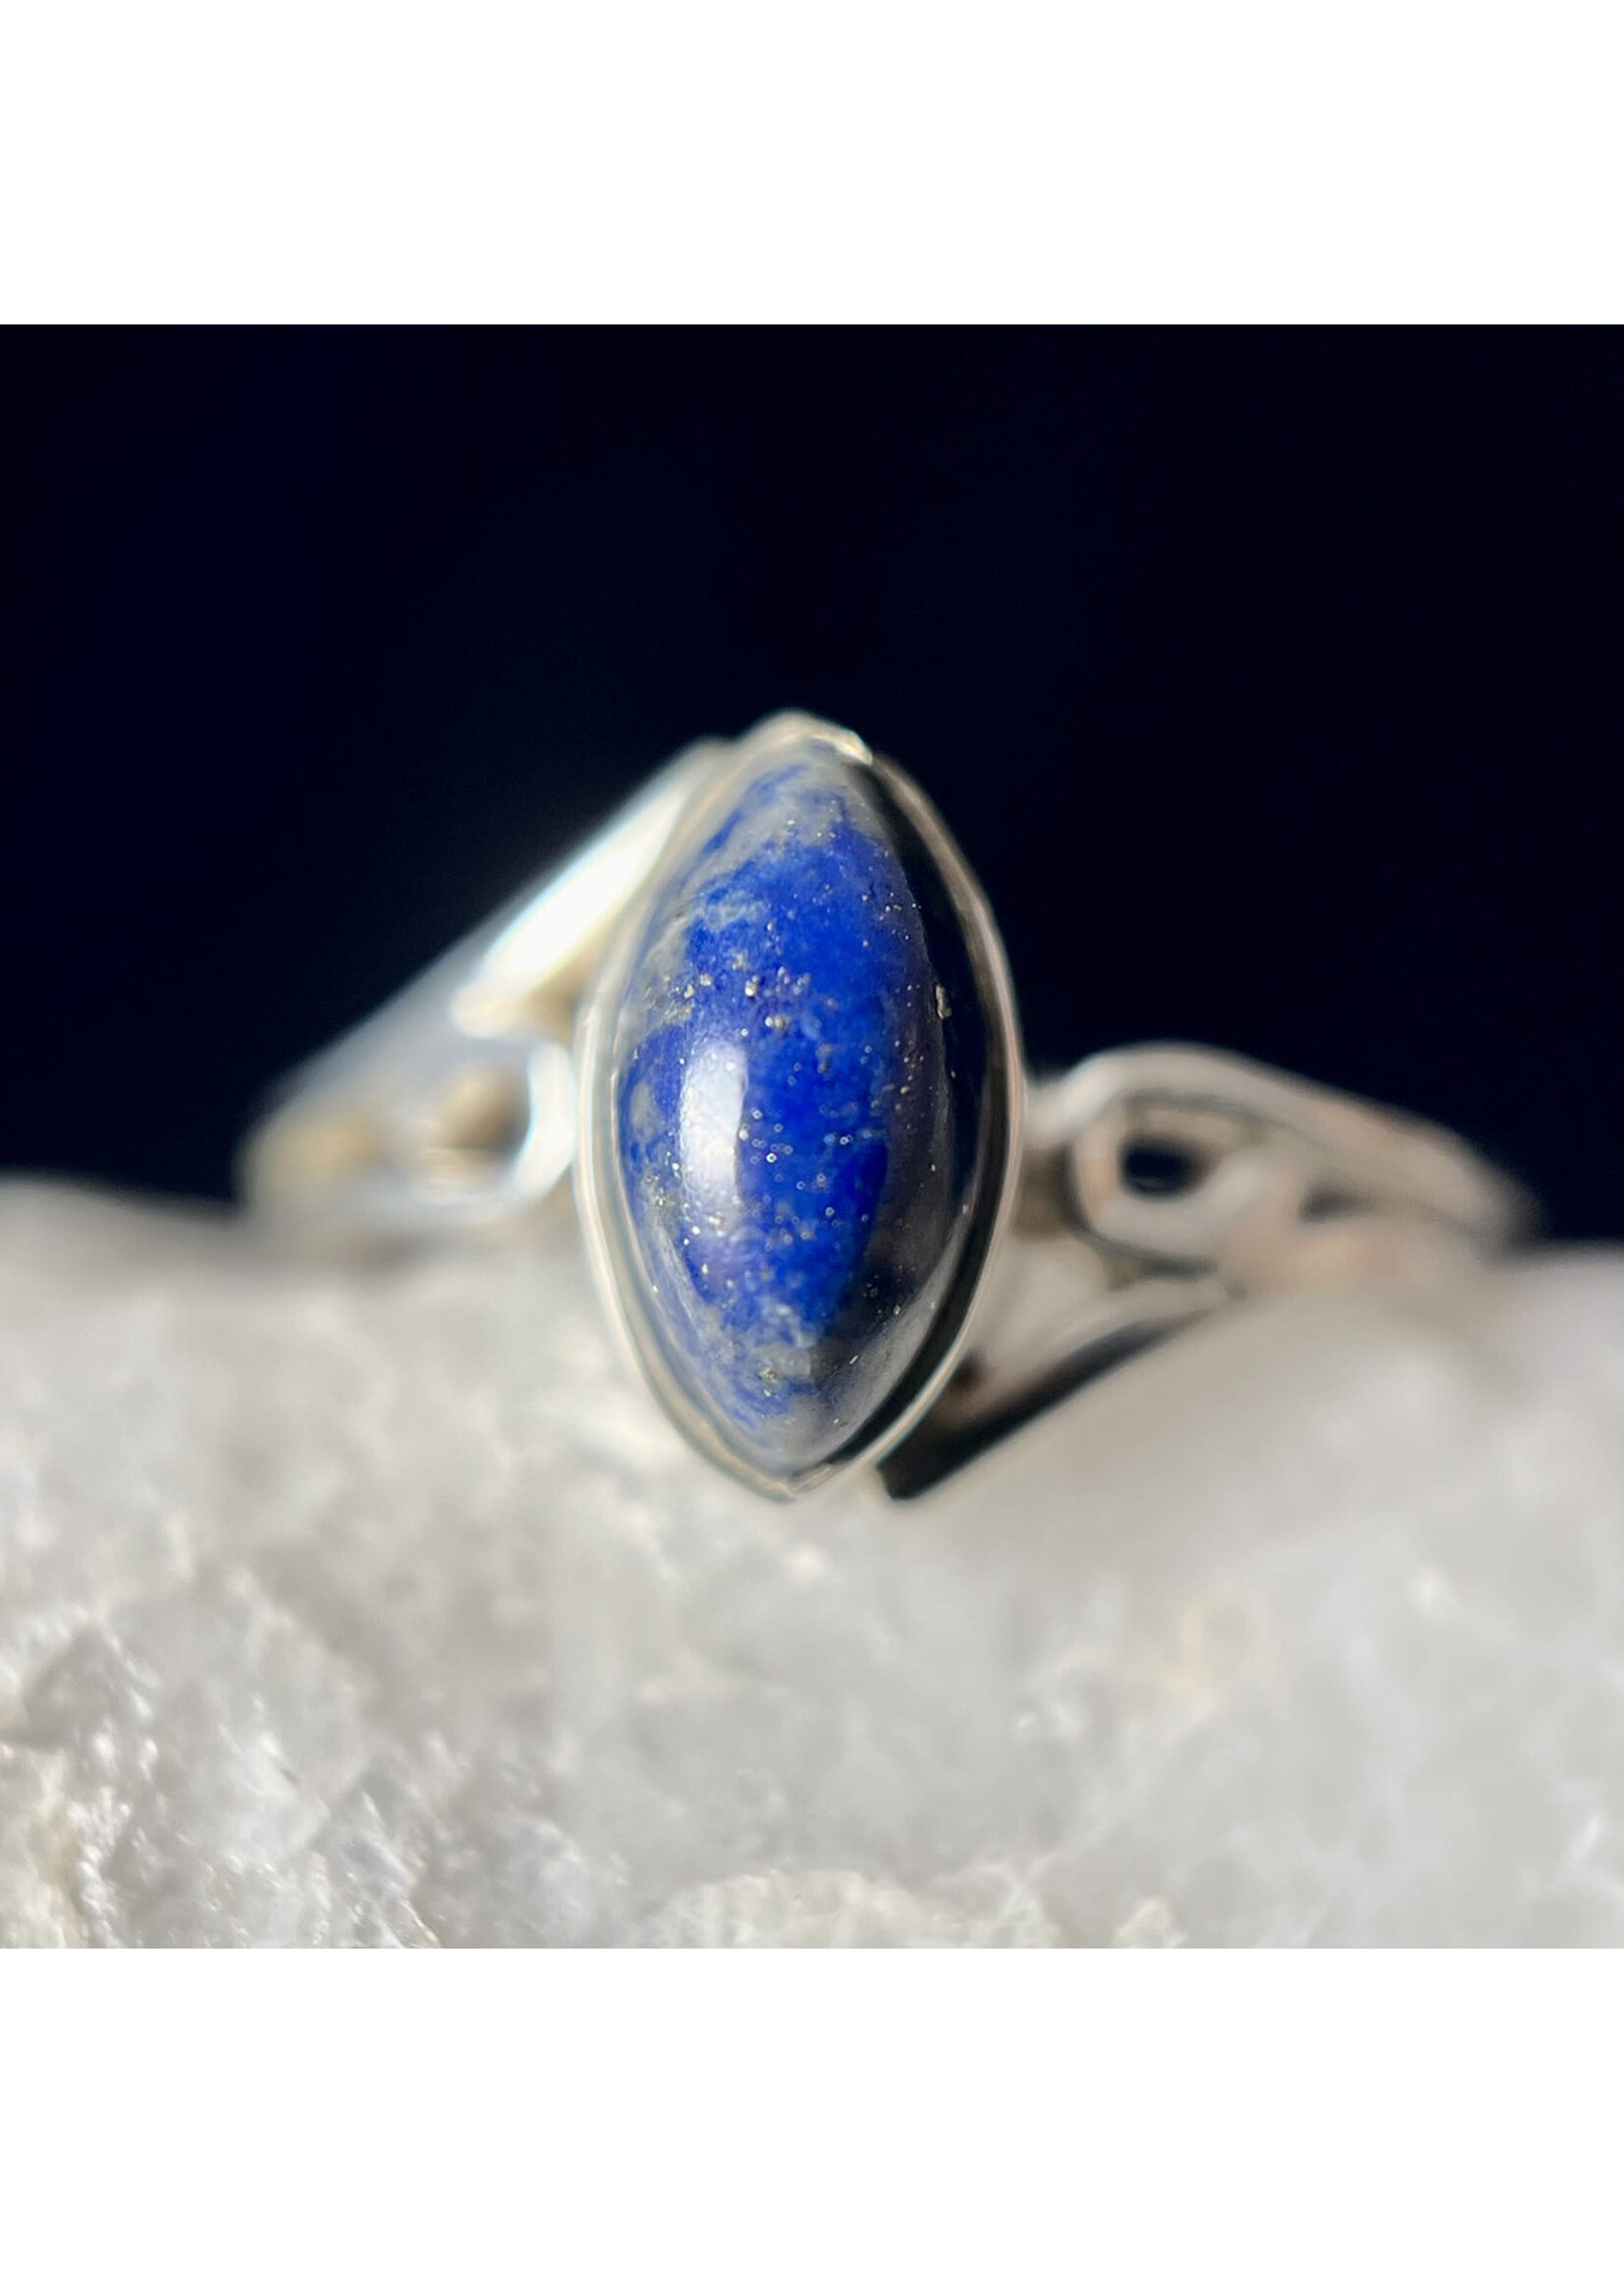 Sterling Silver Lapis Lazuli Wave Ring (9)